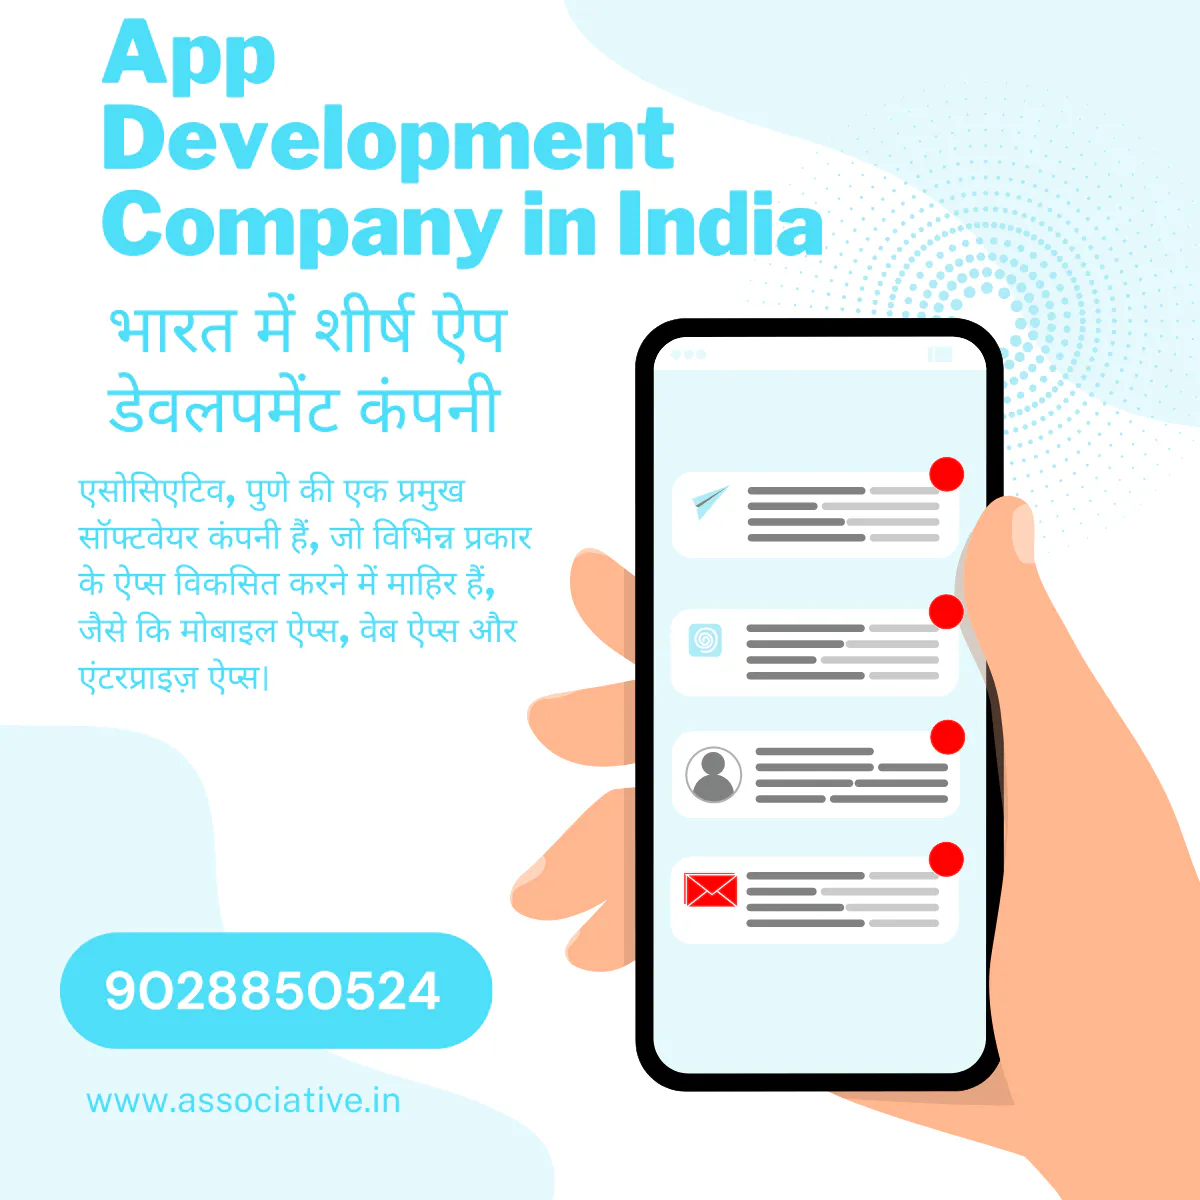 App Development Company in India - Associative